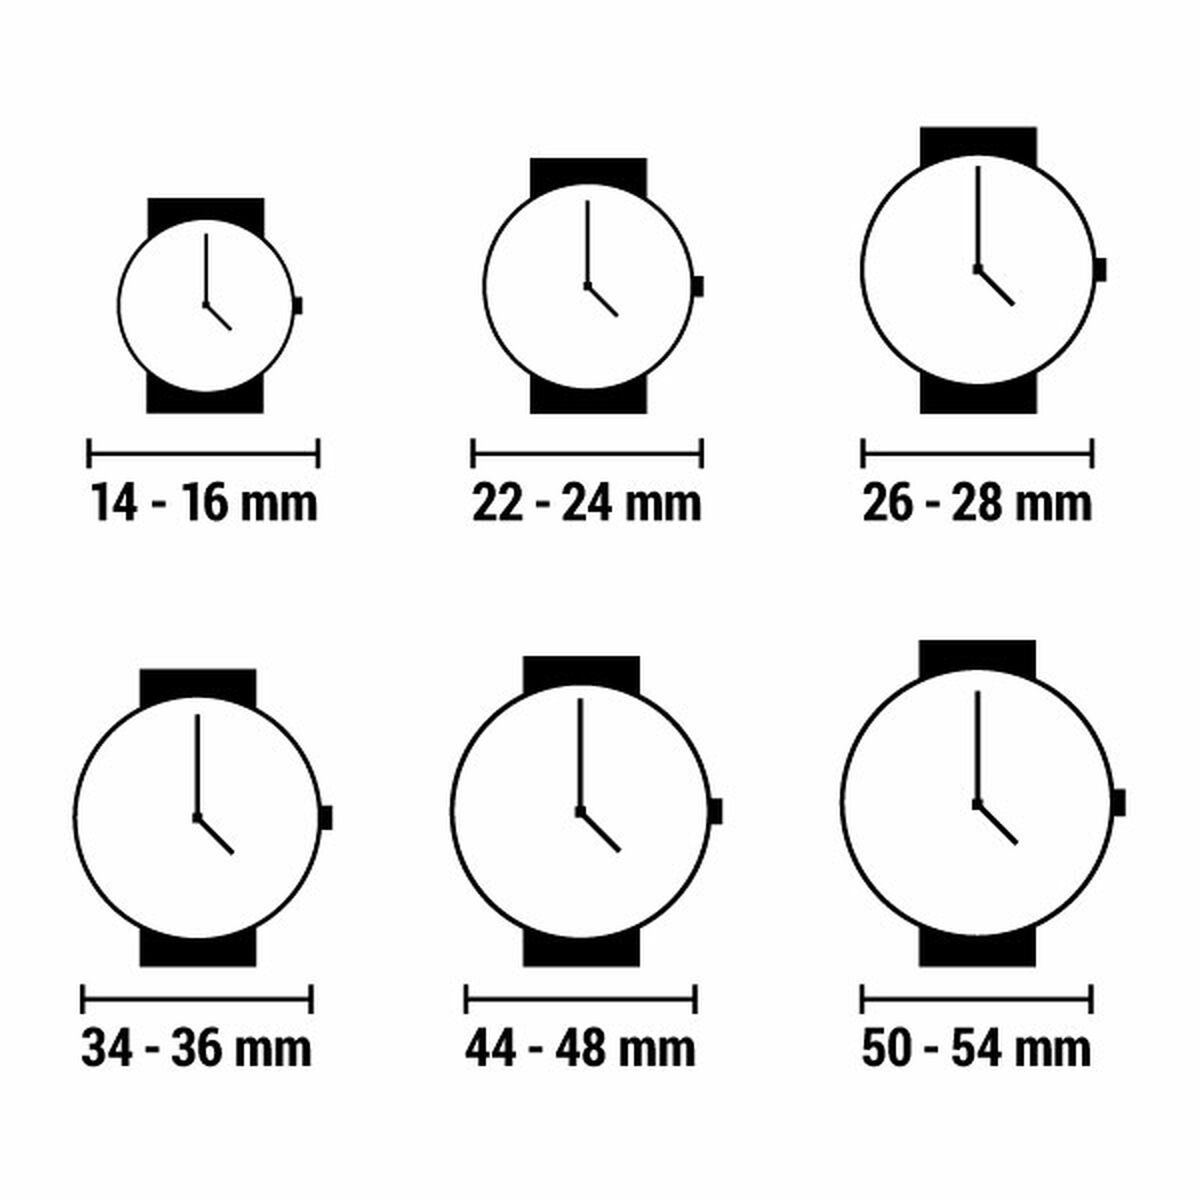 Horloge Dames CO88 Collection 8CW-10077